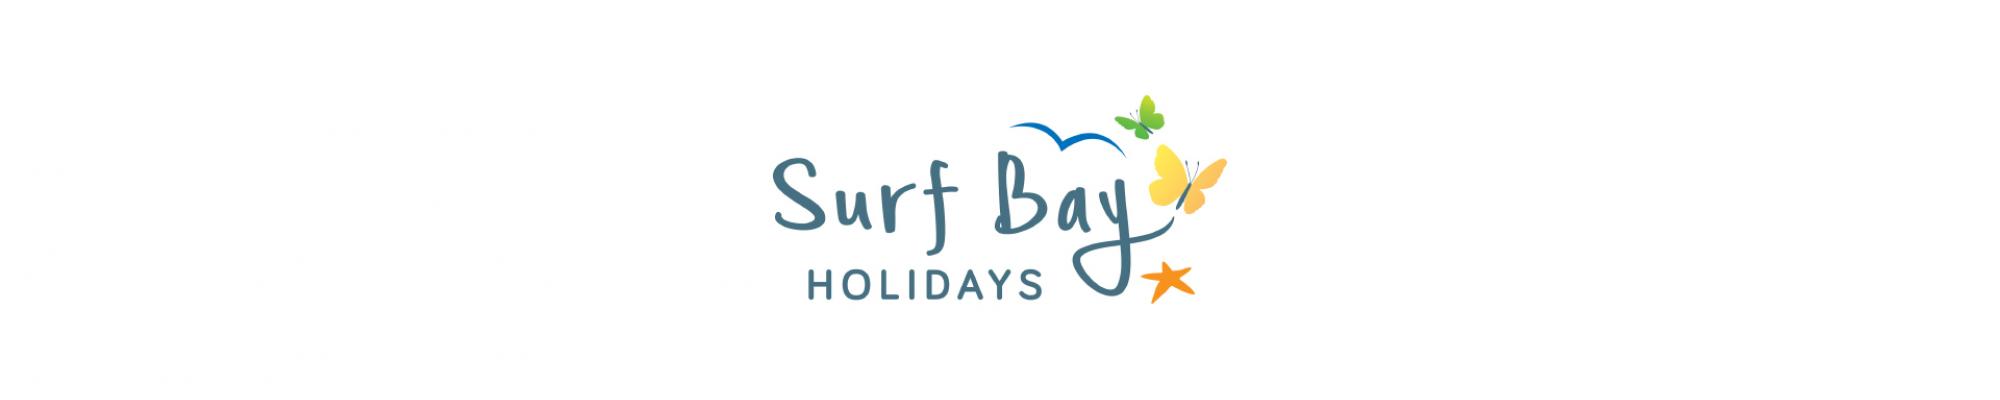 surf bay logo